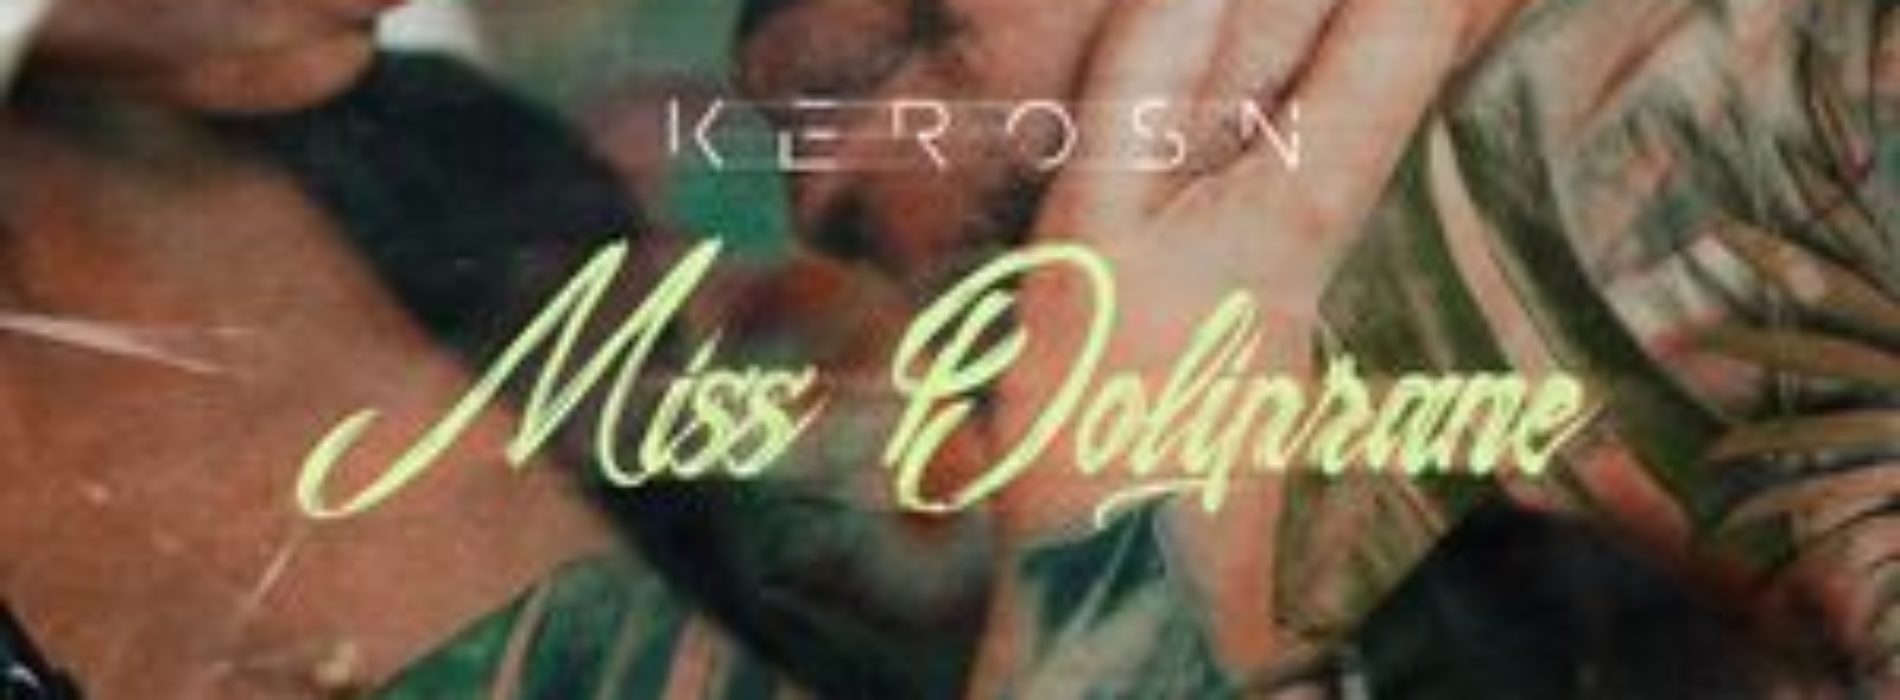 KEROS-N – MISS DOLIPRANE – Juillet 2019